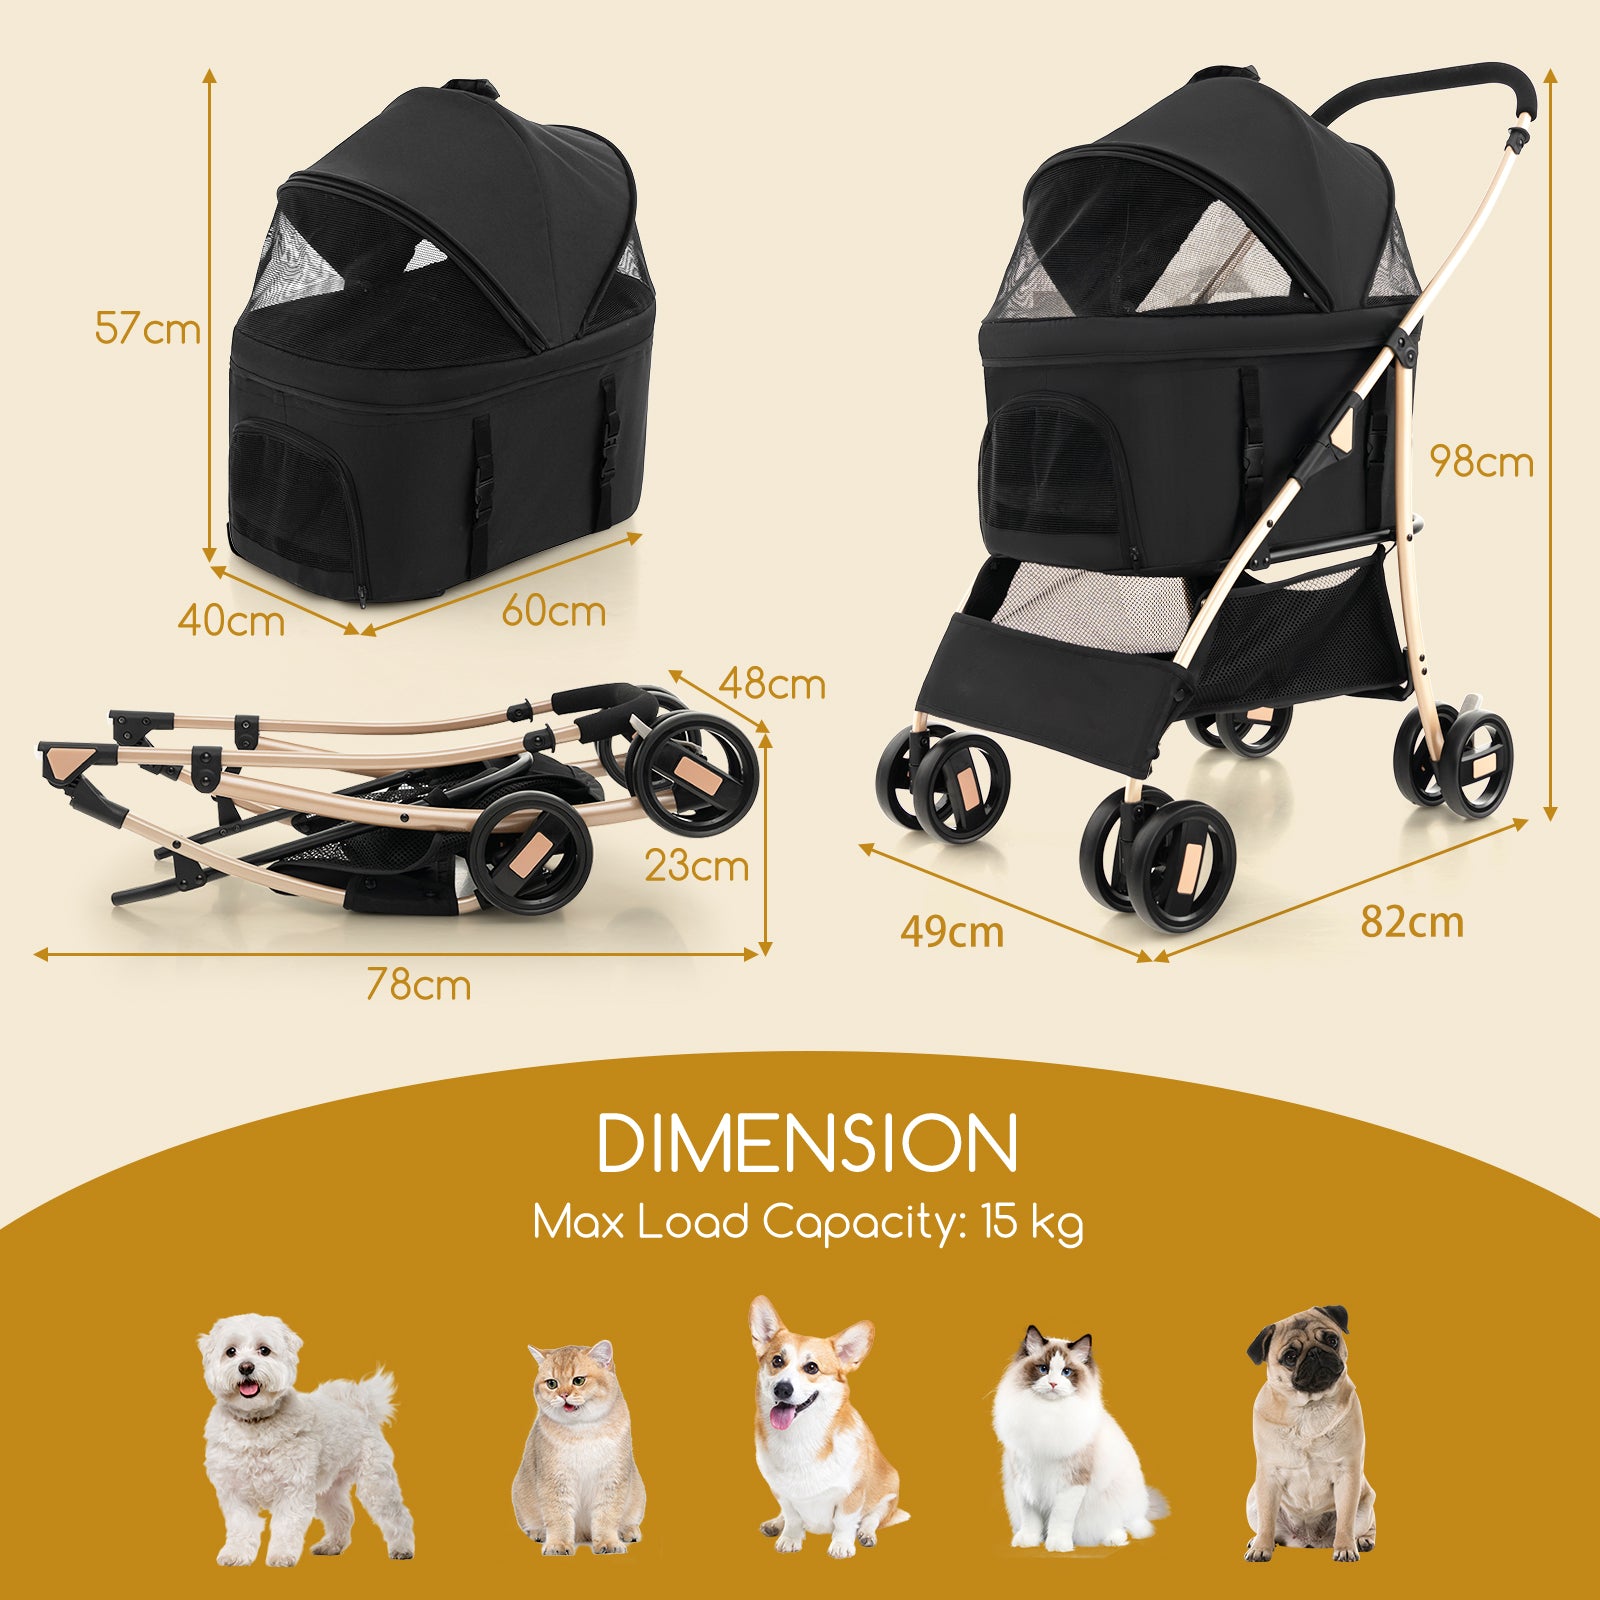 Foldable Pet Stroller with 4-Level Adjustable Canopy and Storage Basket-Black & Gold